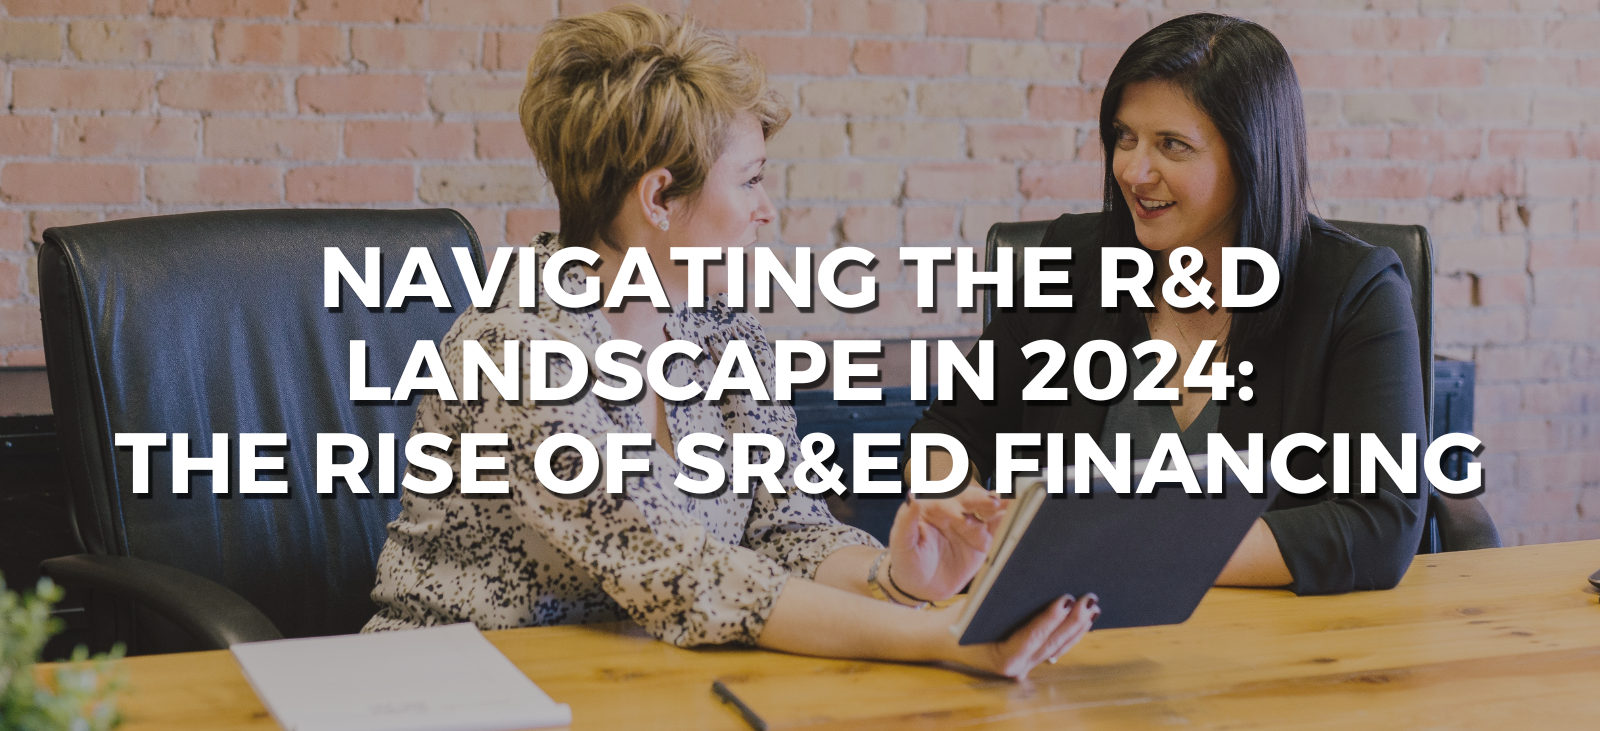 navigating the r&d landscape in 2024 the rise of sr&ed financing